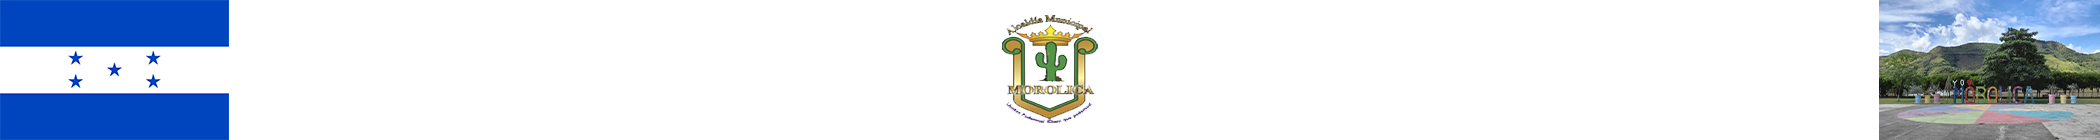 Banner Superior SIMSAN Morolica